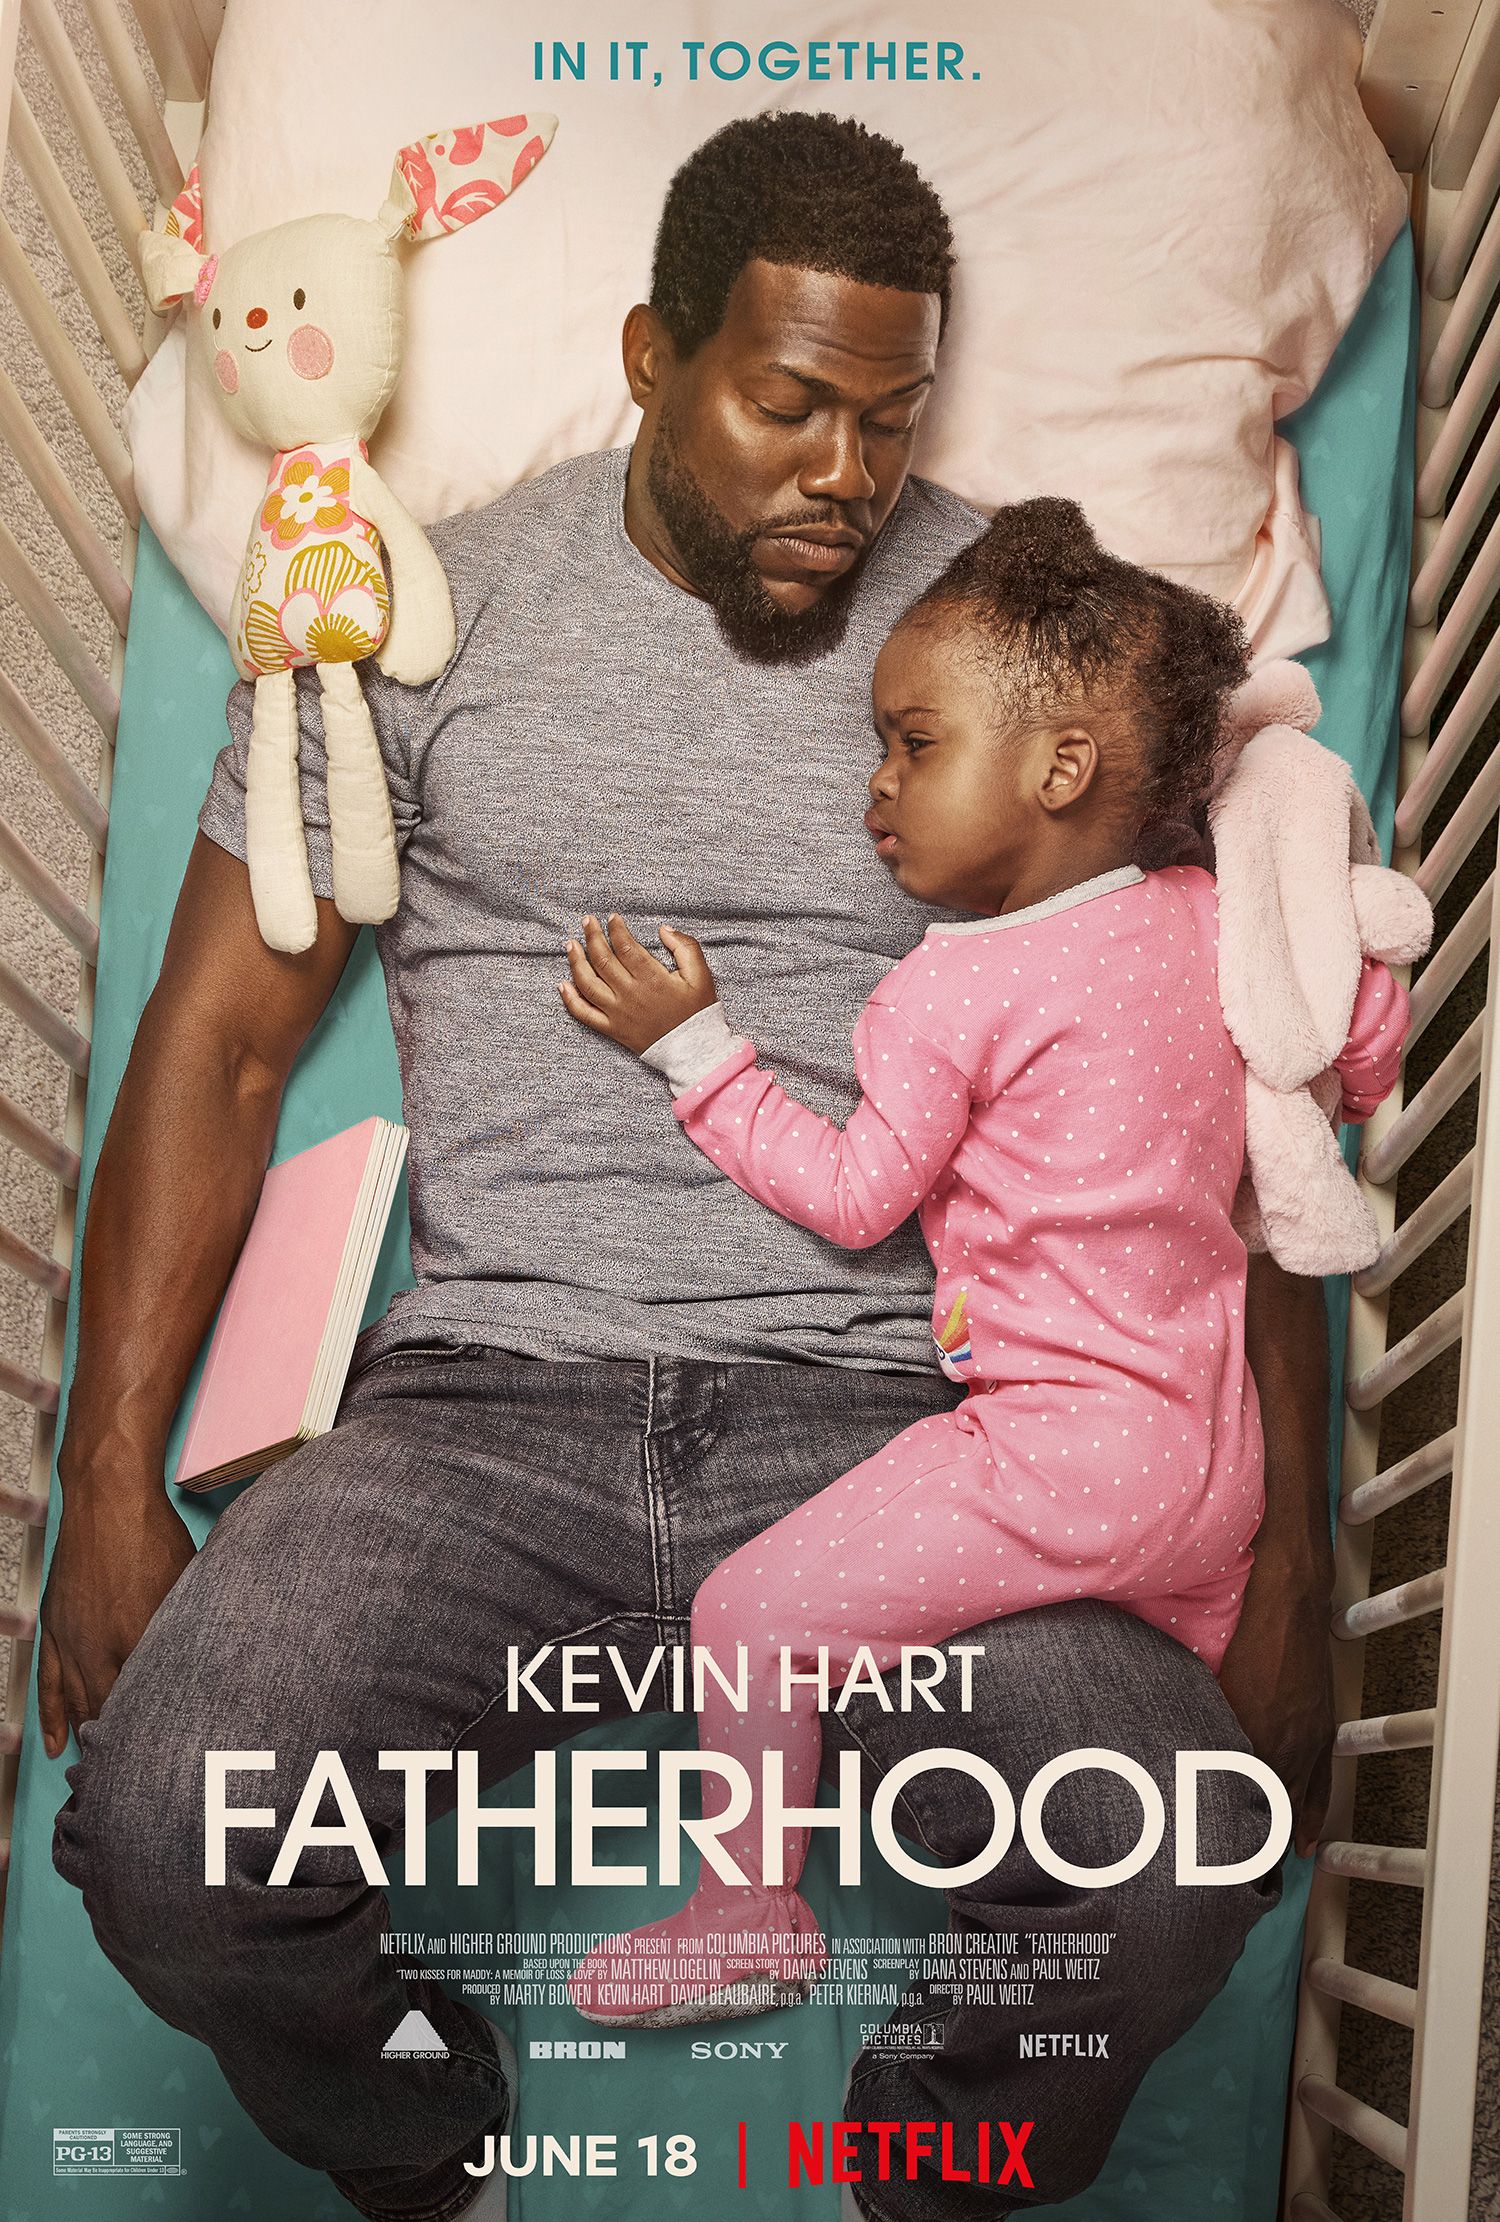 the Fatherhood movie poster